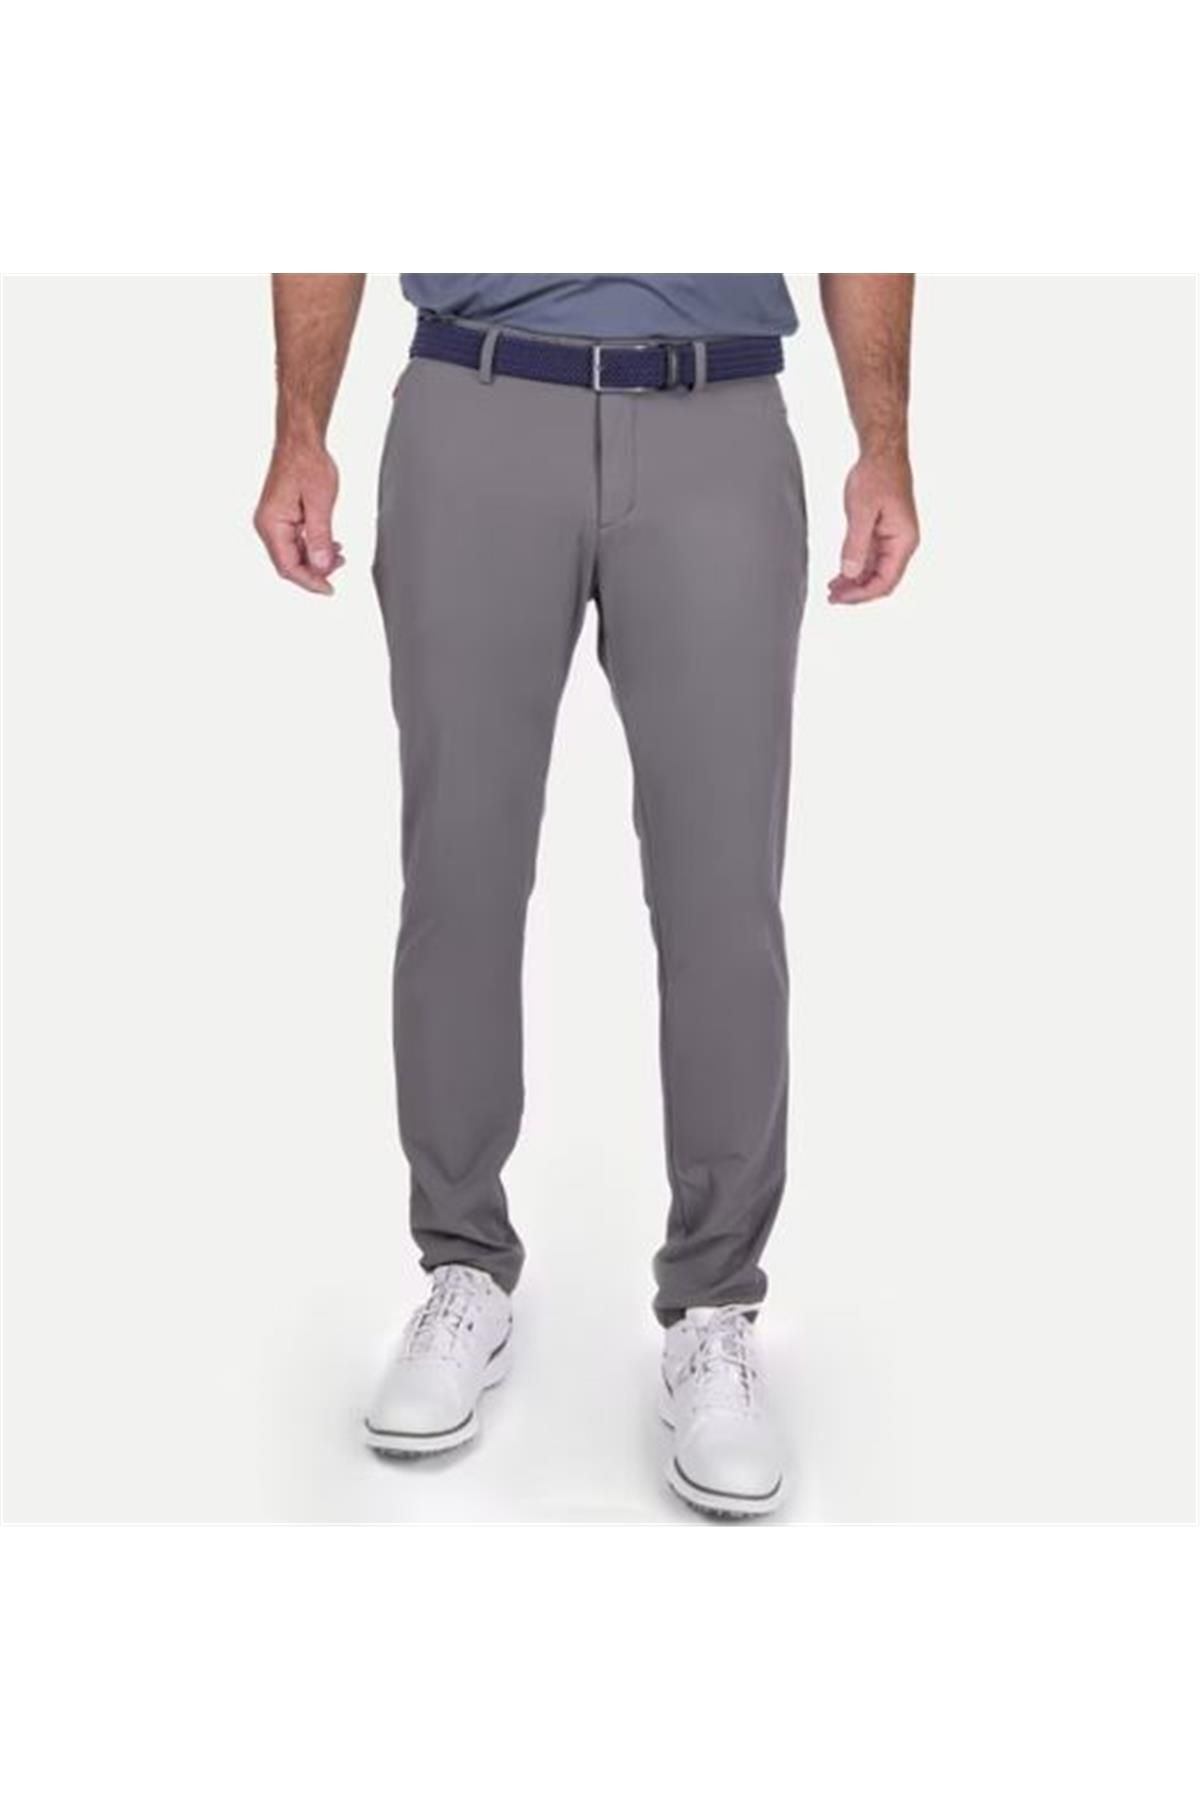 Puma Kjus Iver Mens Tailored Fit Golf Pants / Özel Kesim Erkek Golf Pantolon